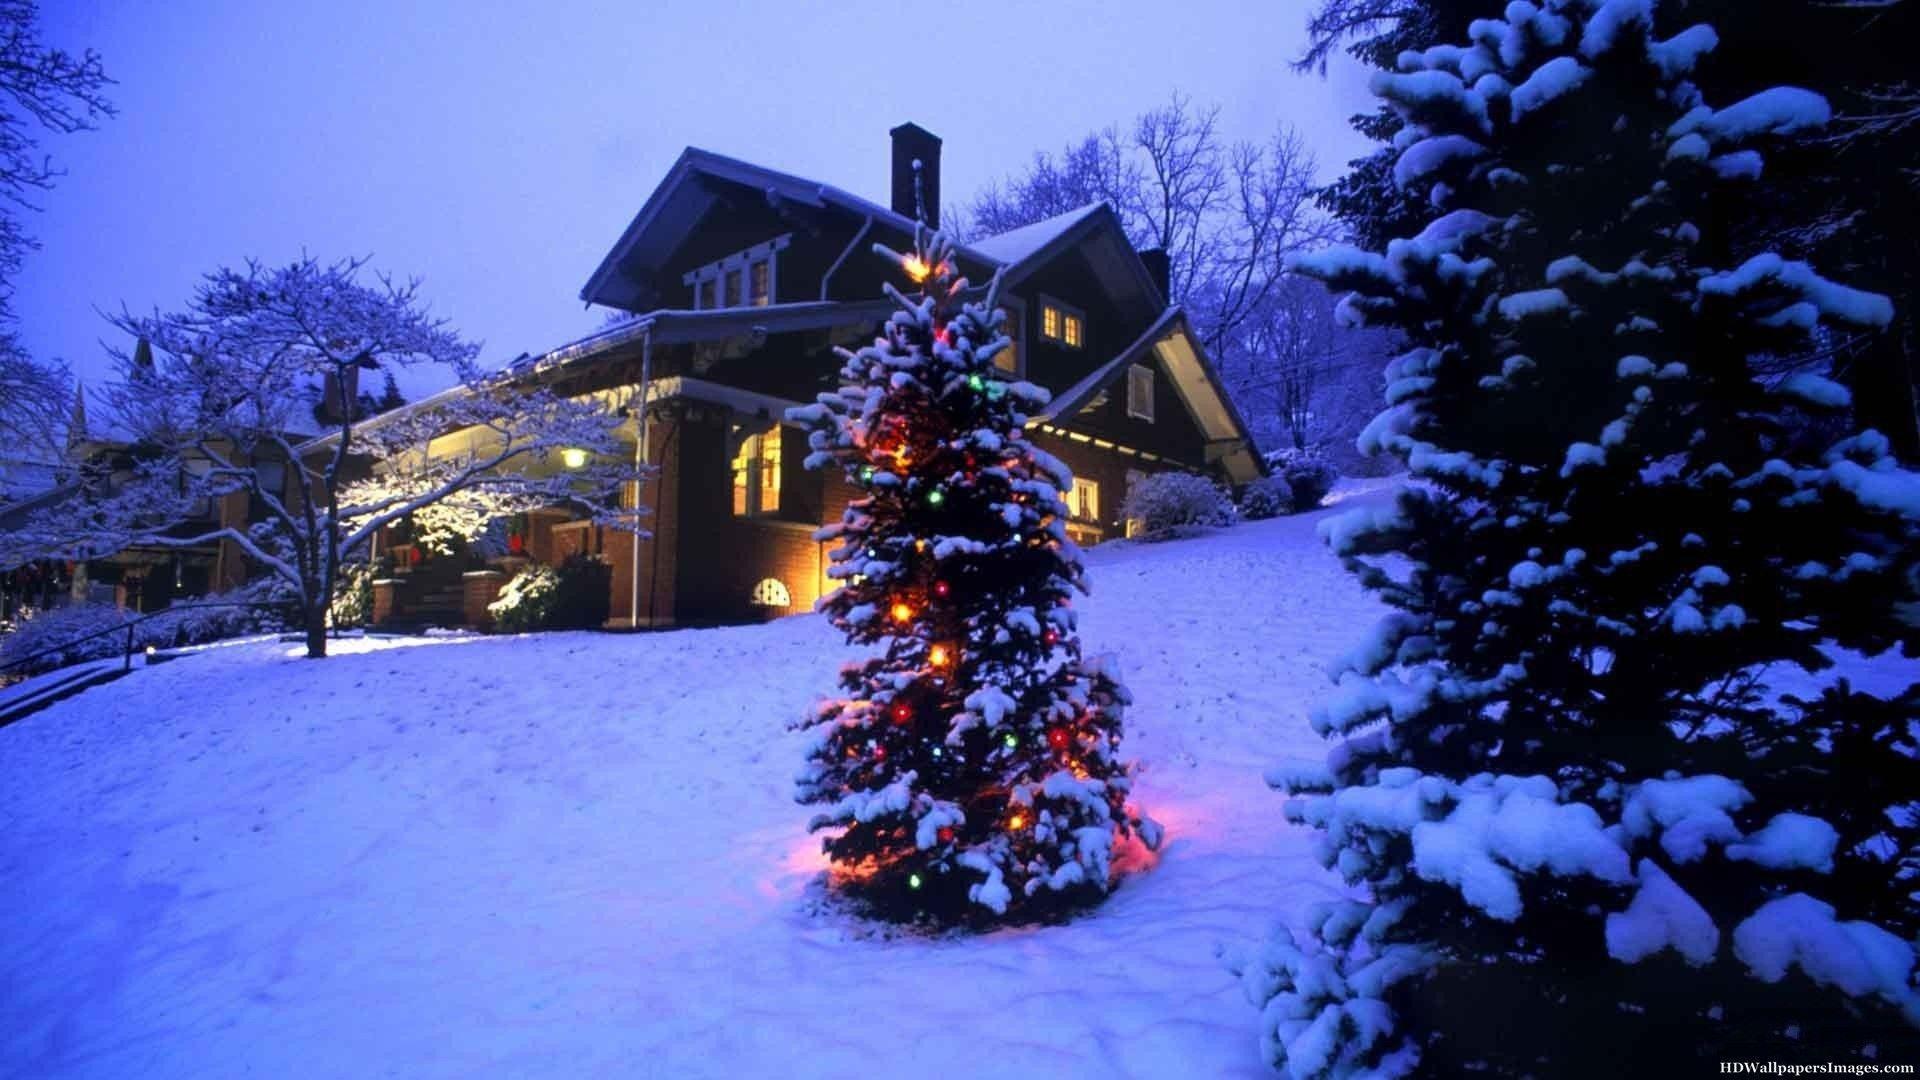 Christmas Cottage Beautiful Image. HD Wallpaper Image